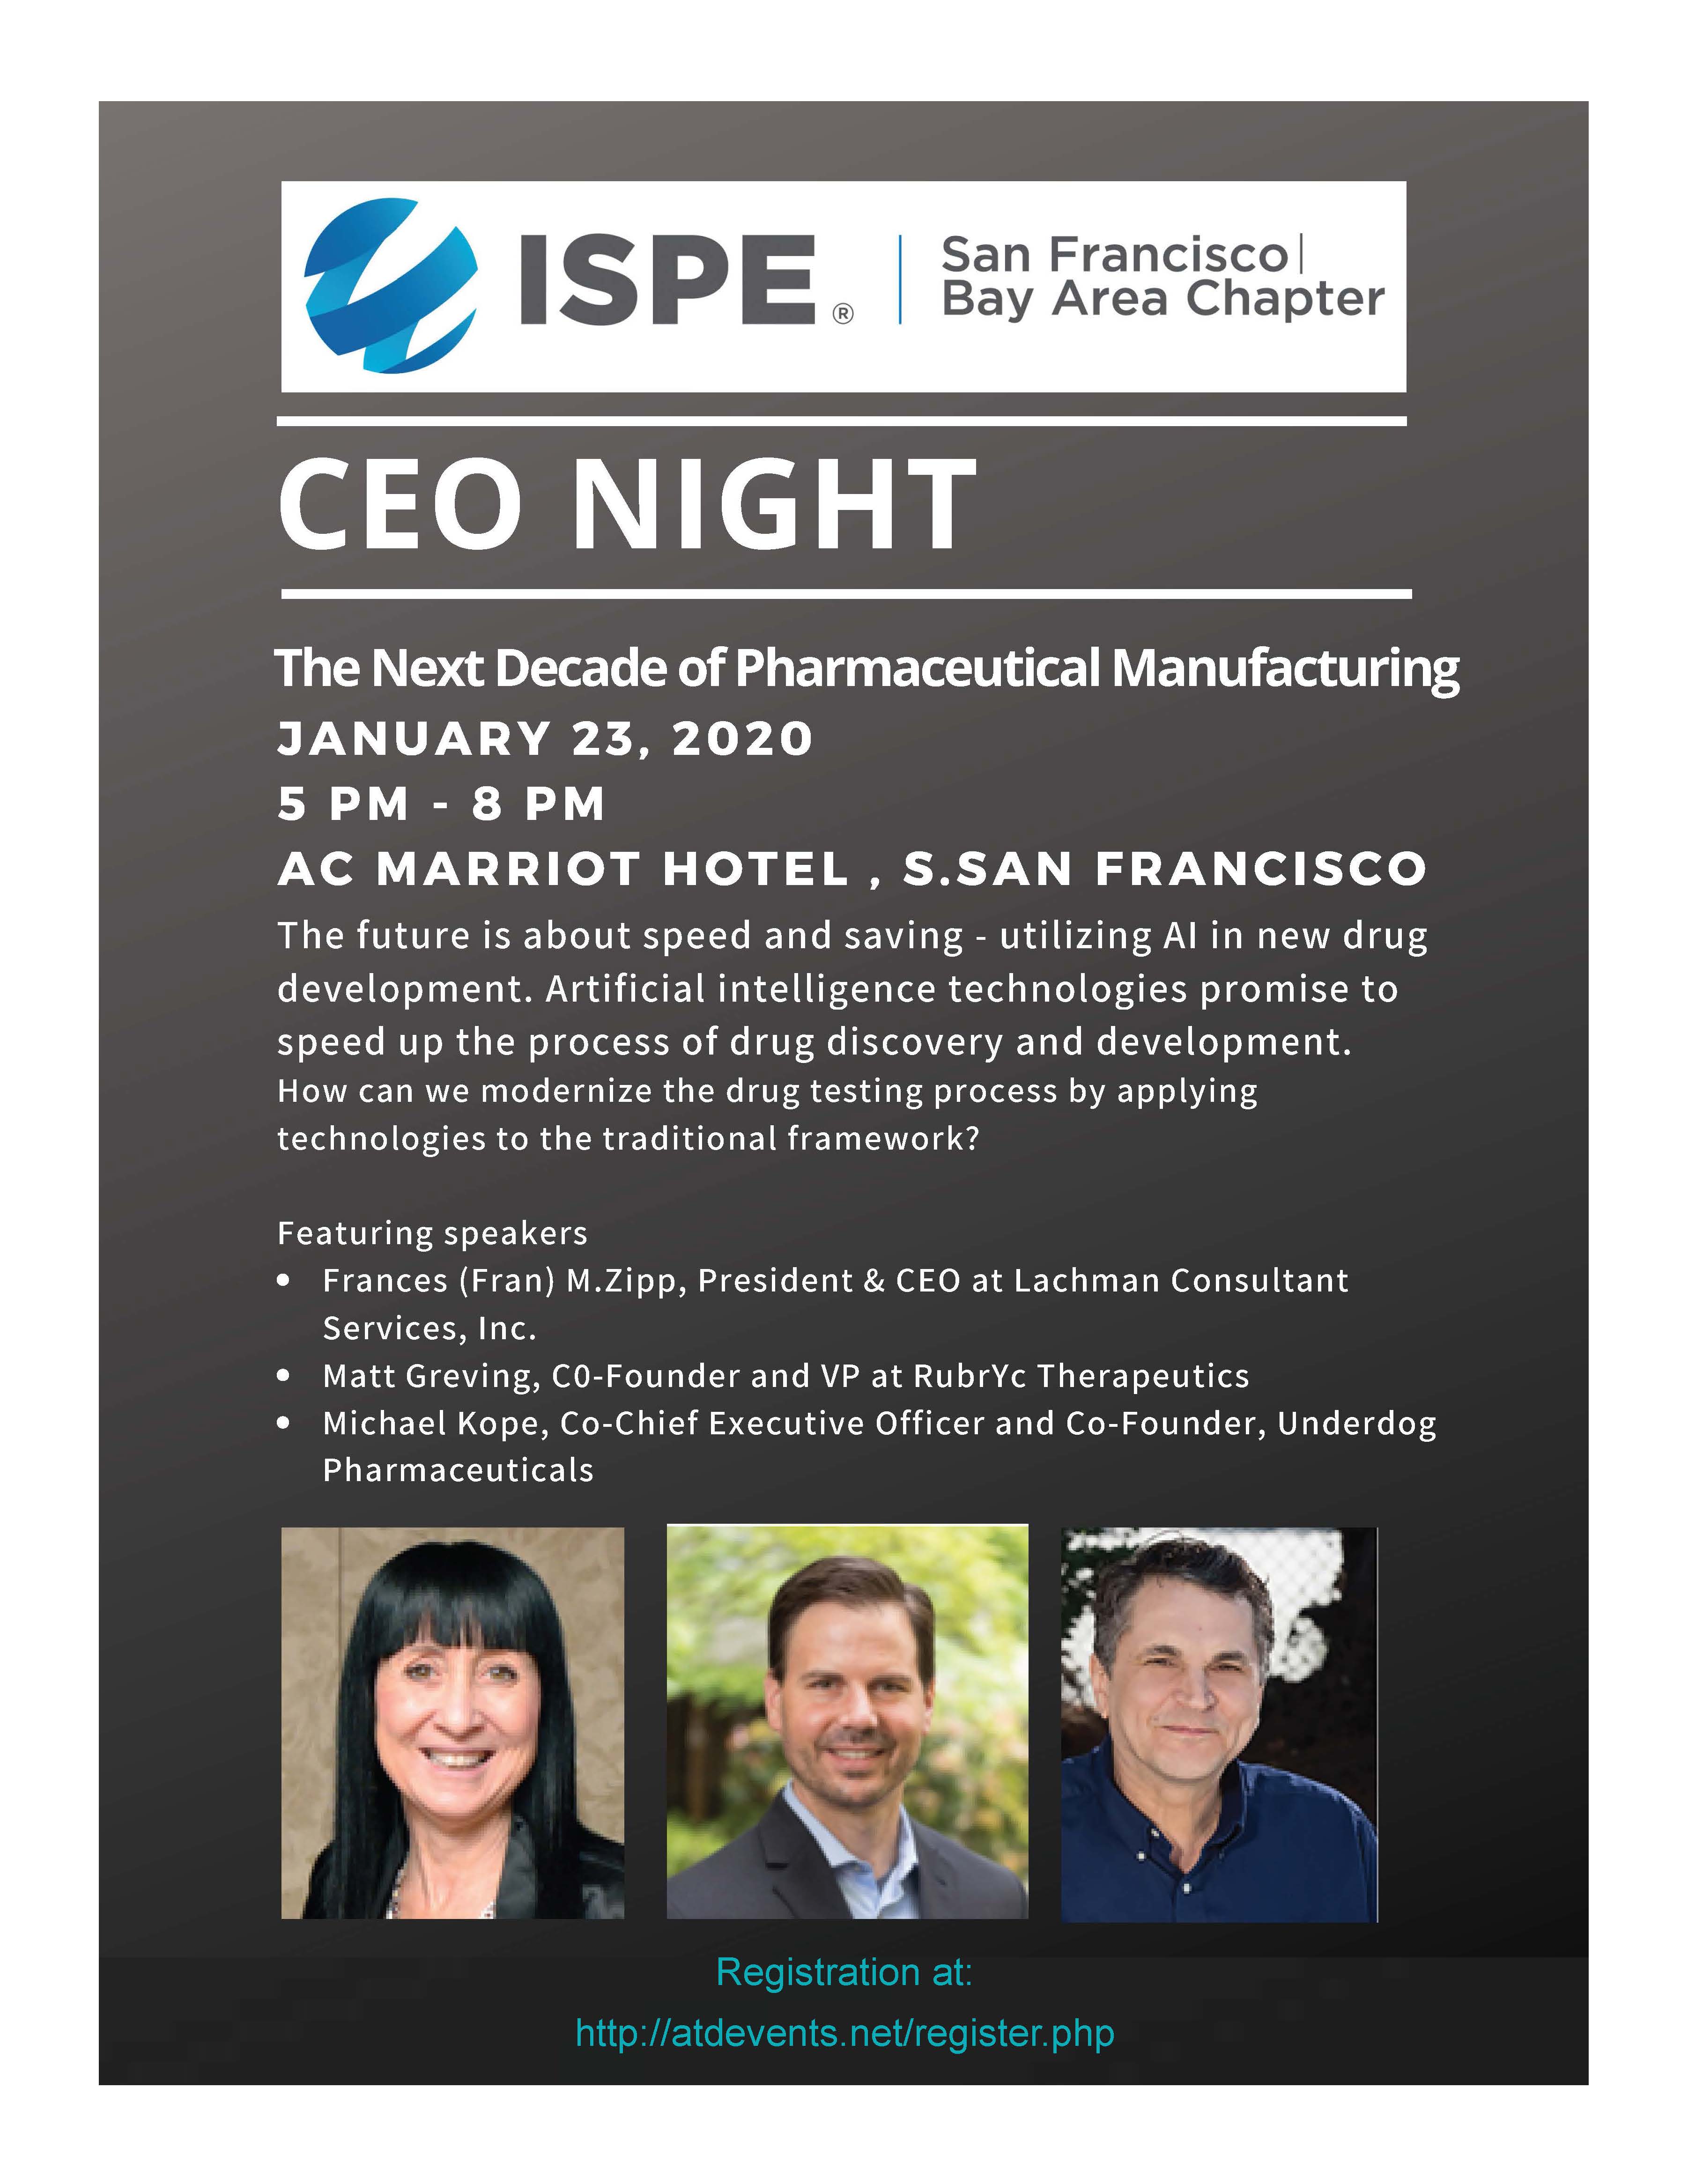 ISPE SF CEO Night Graphic